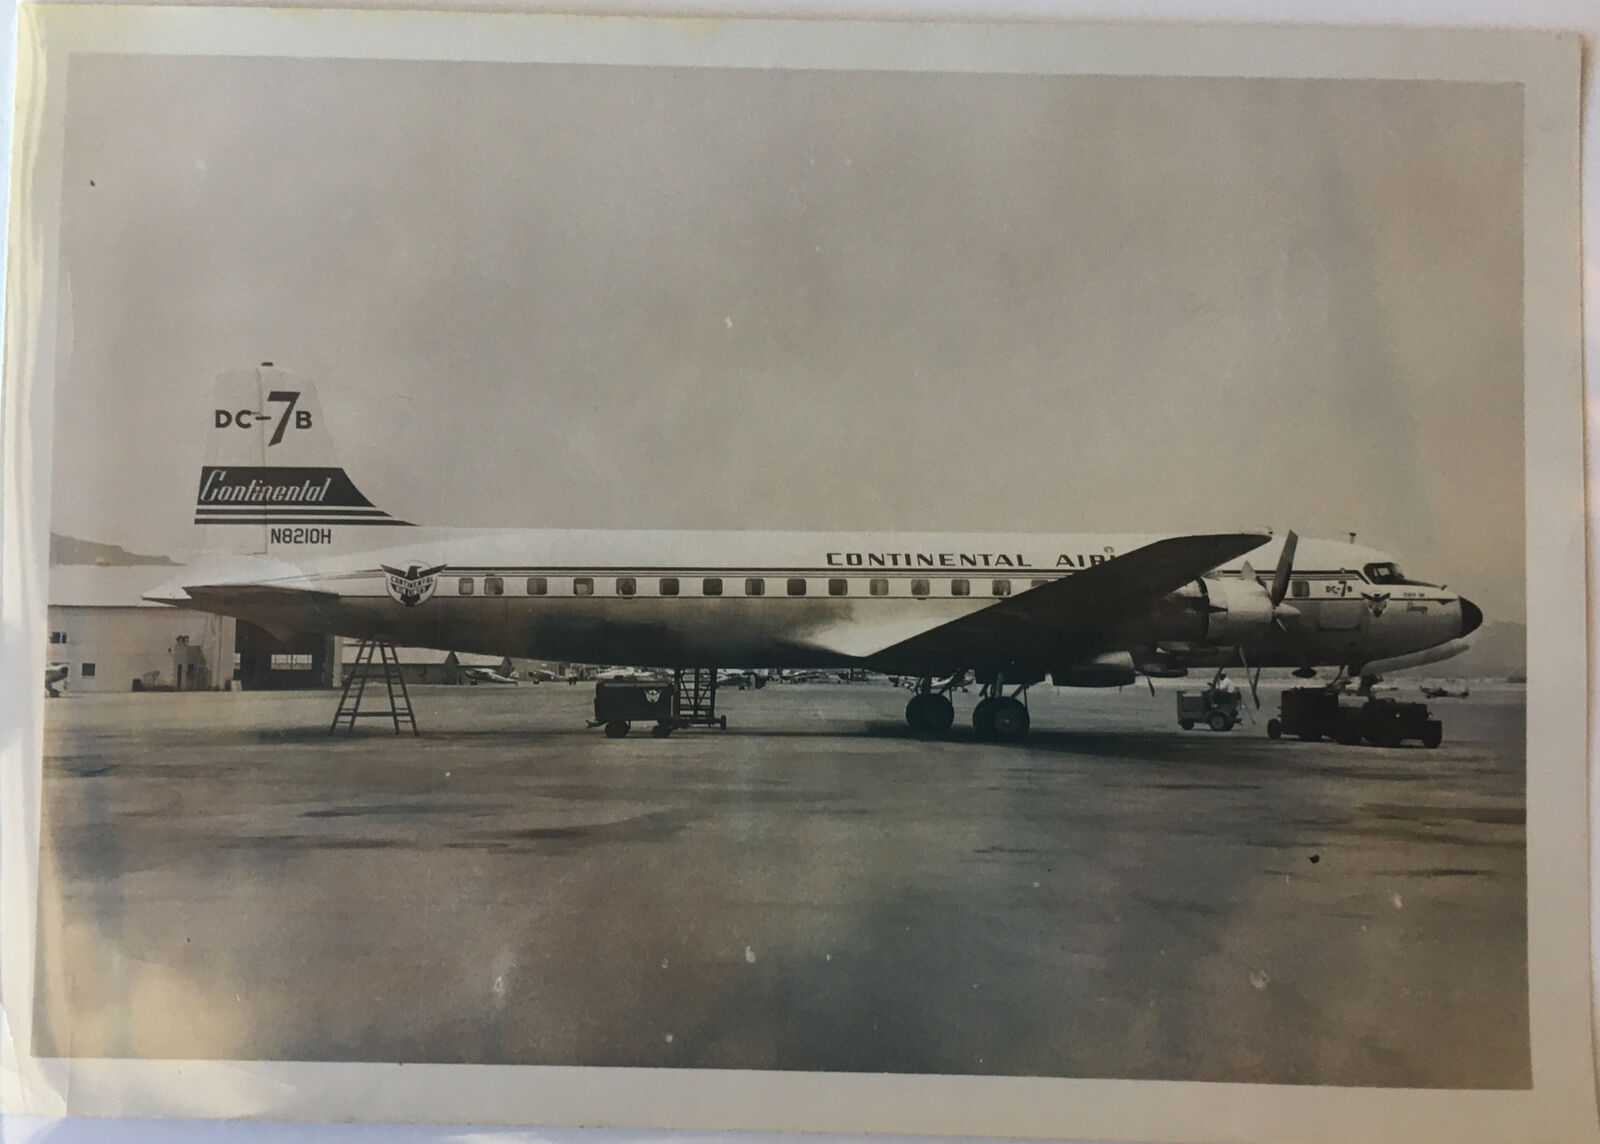 Vintage Original Continental Airlines DC-7 B International News Photo 1957